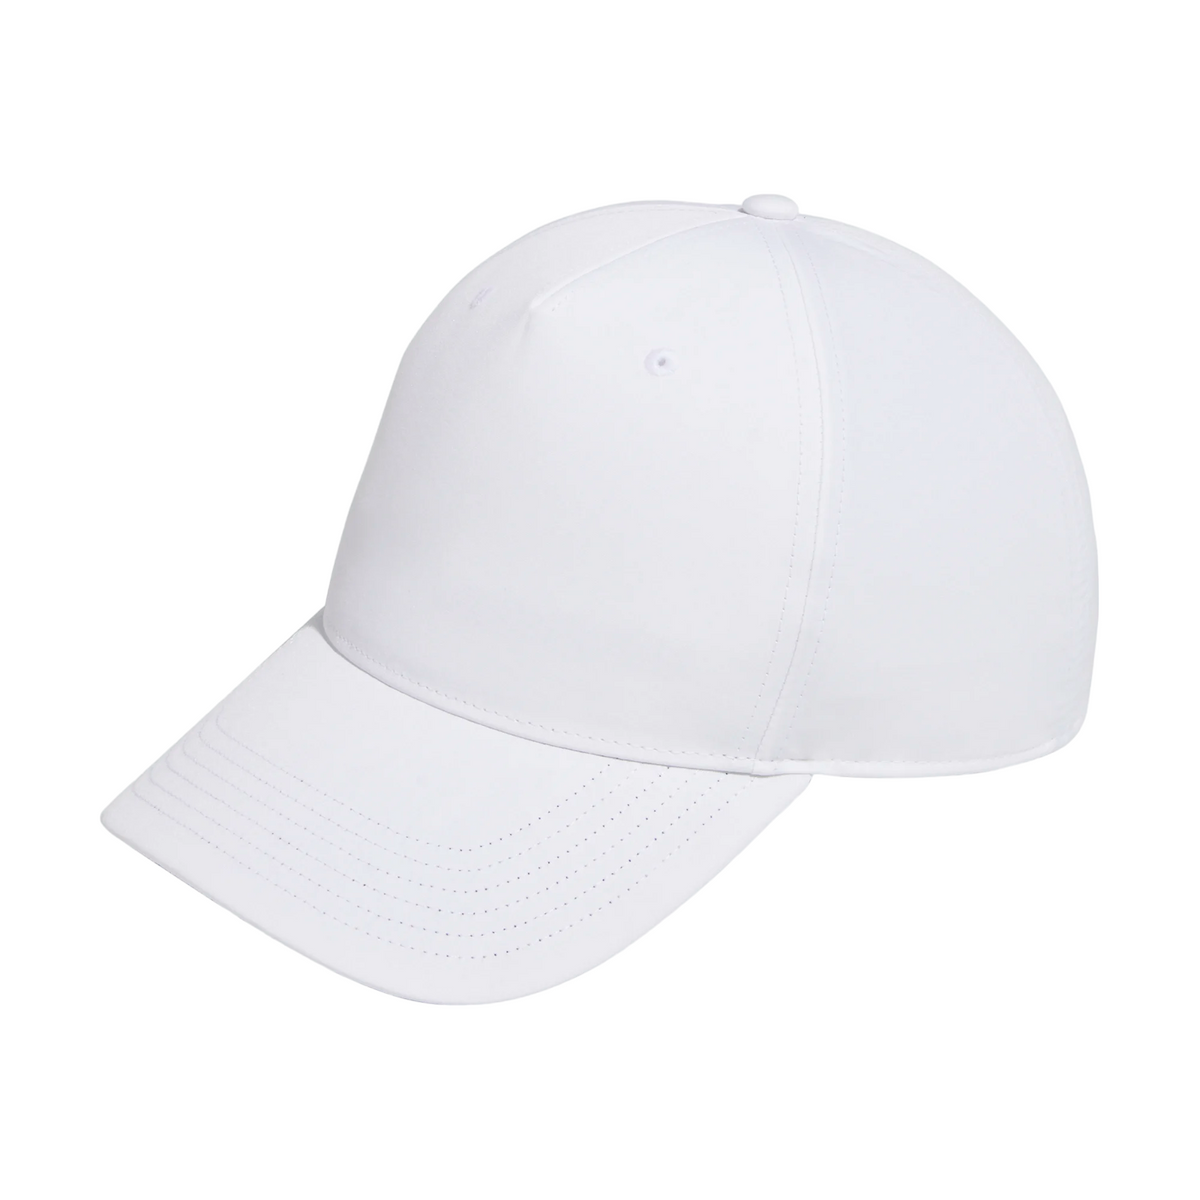 Adidas Golf Performance Crestable Hat - Mens